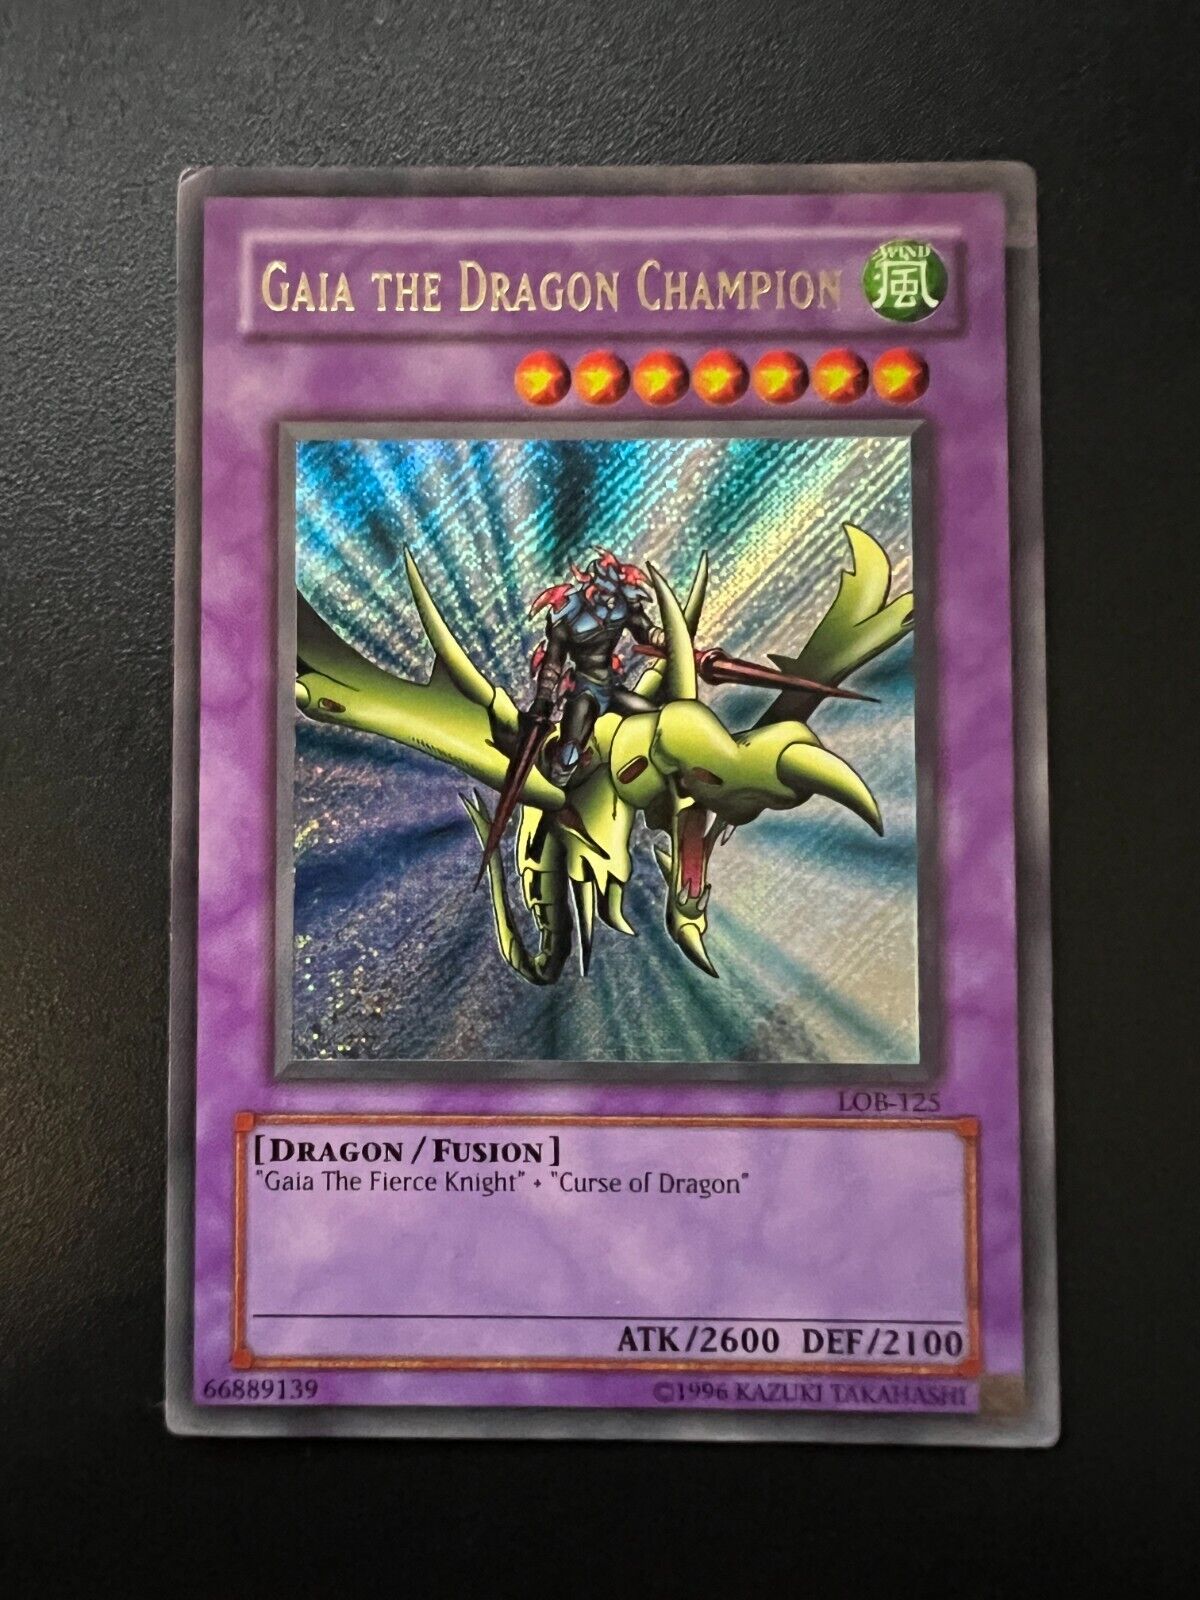 Gaia the Dragon Champion LOB-125 Ultra Name Misprint Light Play+ Yugioh